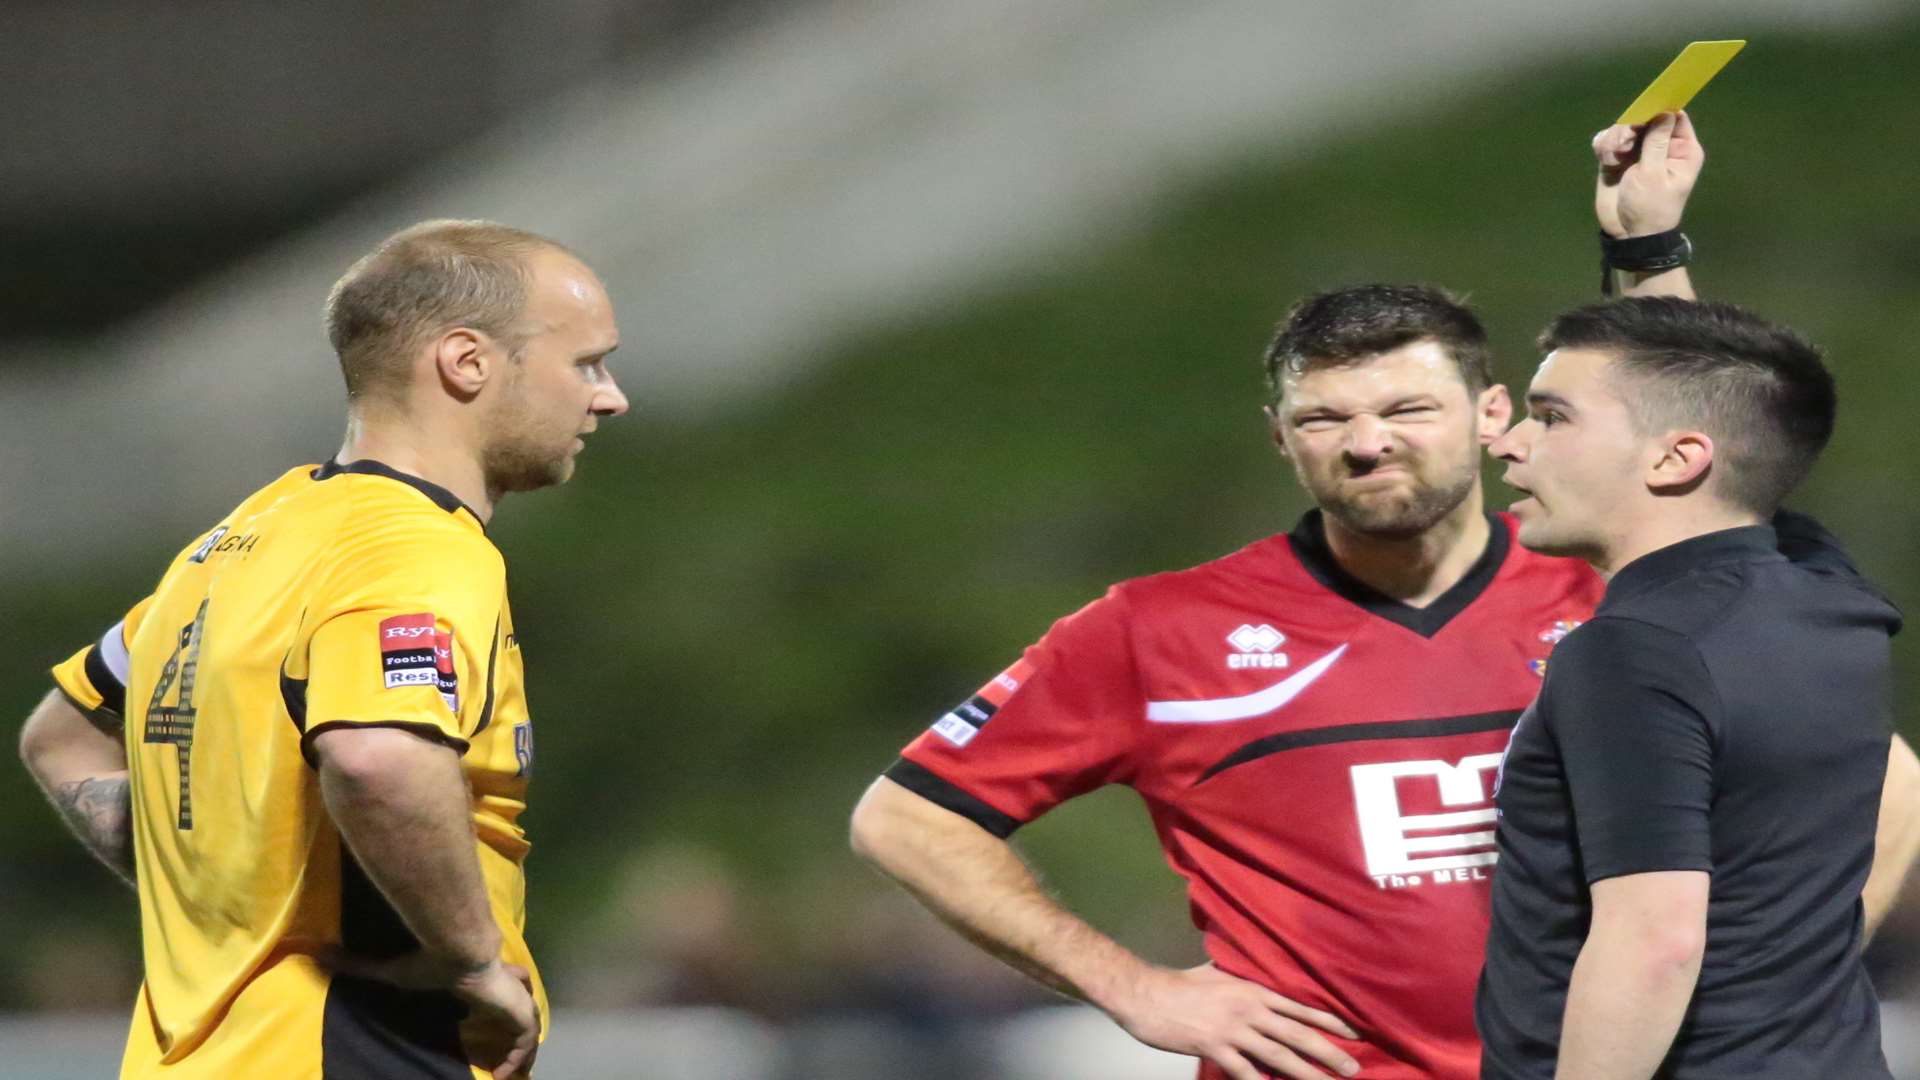 Maidstone's Steve Watt gets shown a yellow card